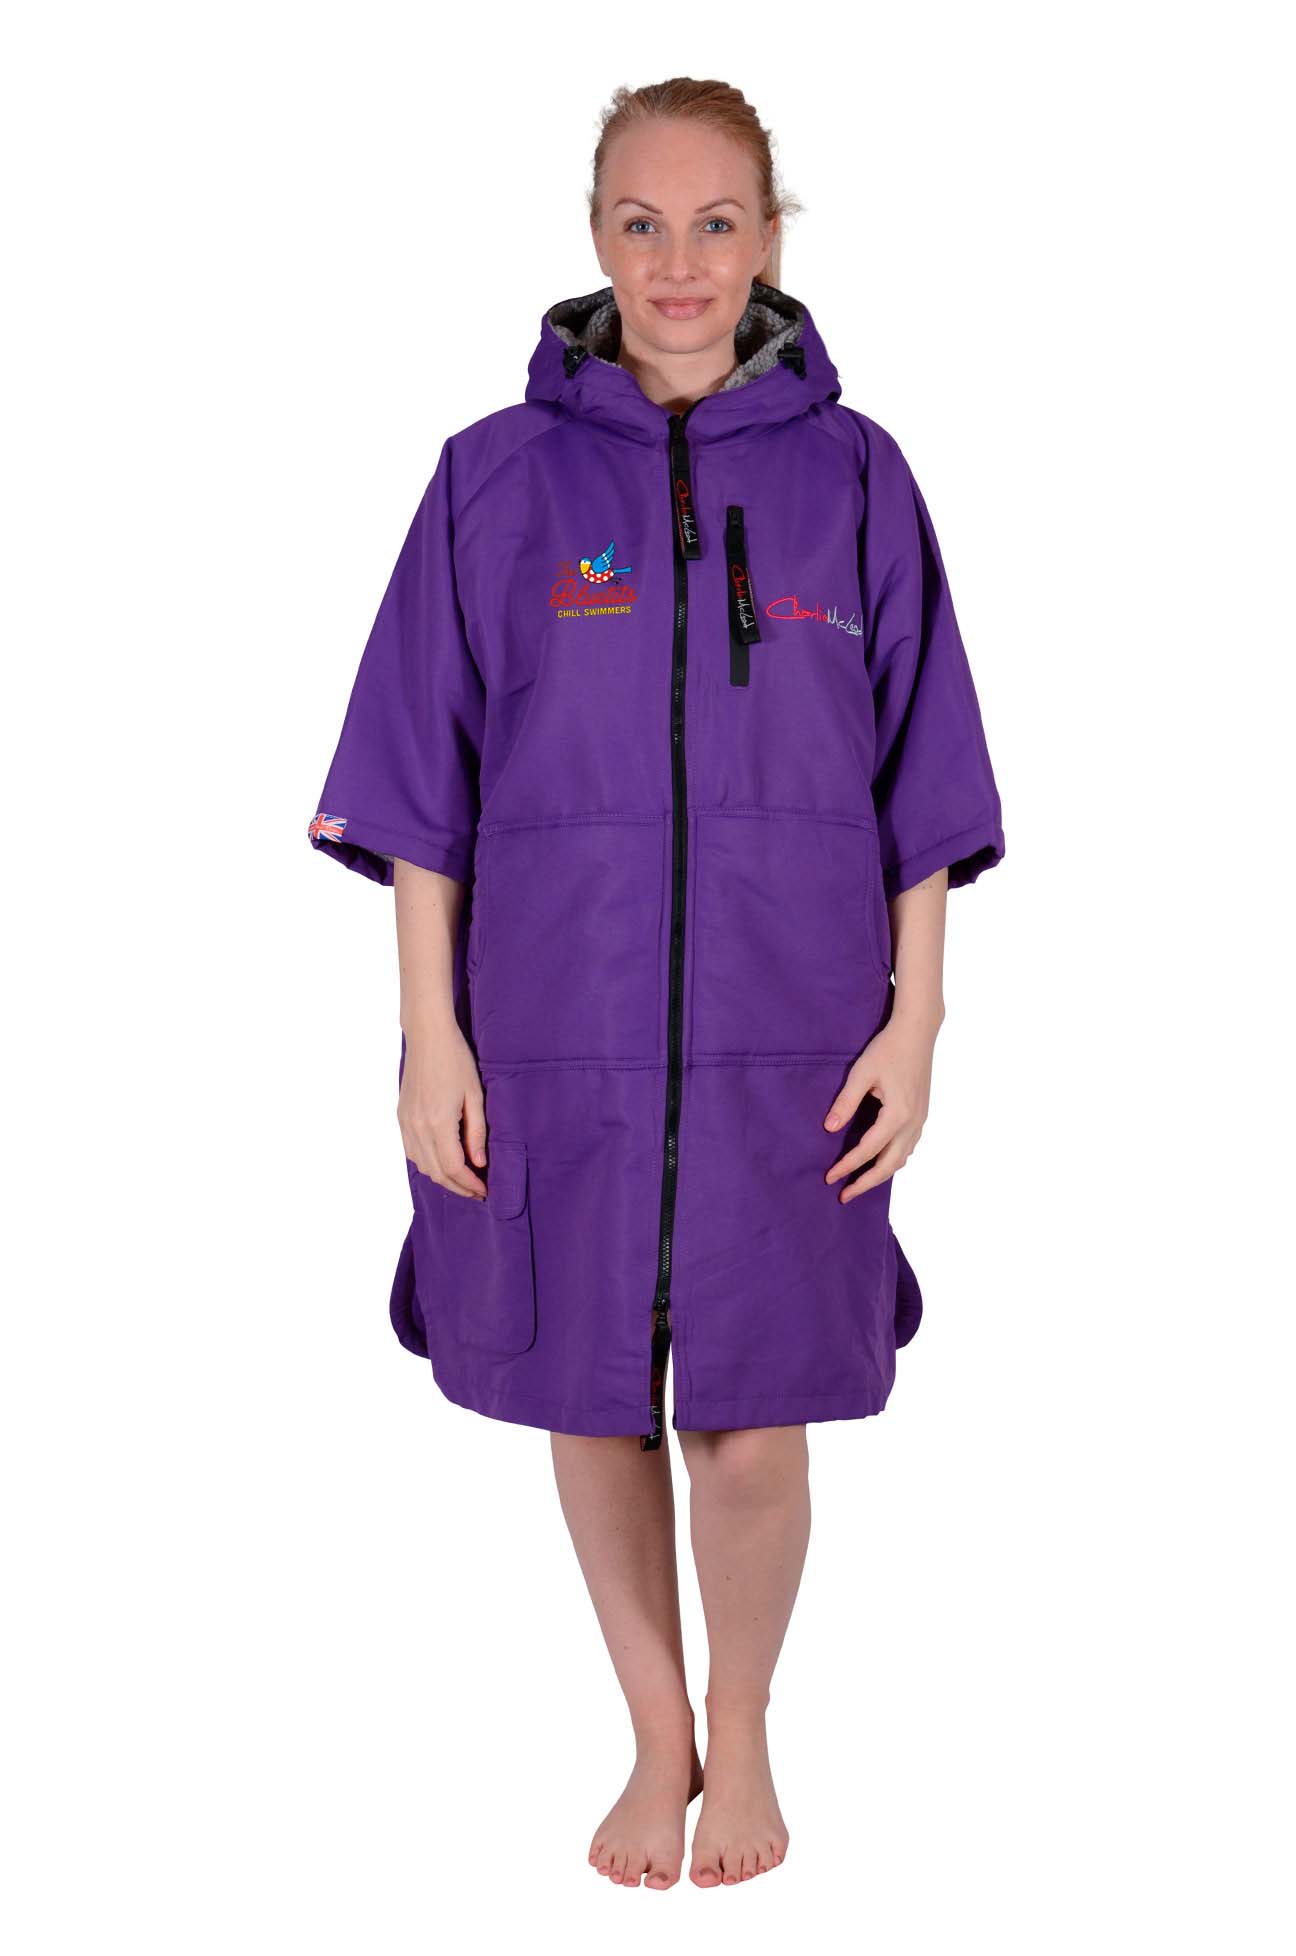 Bluetits Original Sports Cloak Short Sleeve Purple Grey (7535811952859)